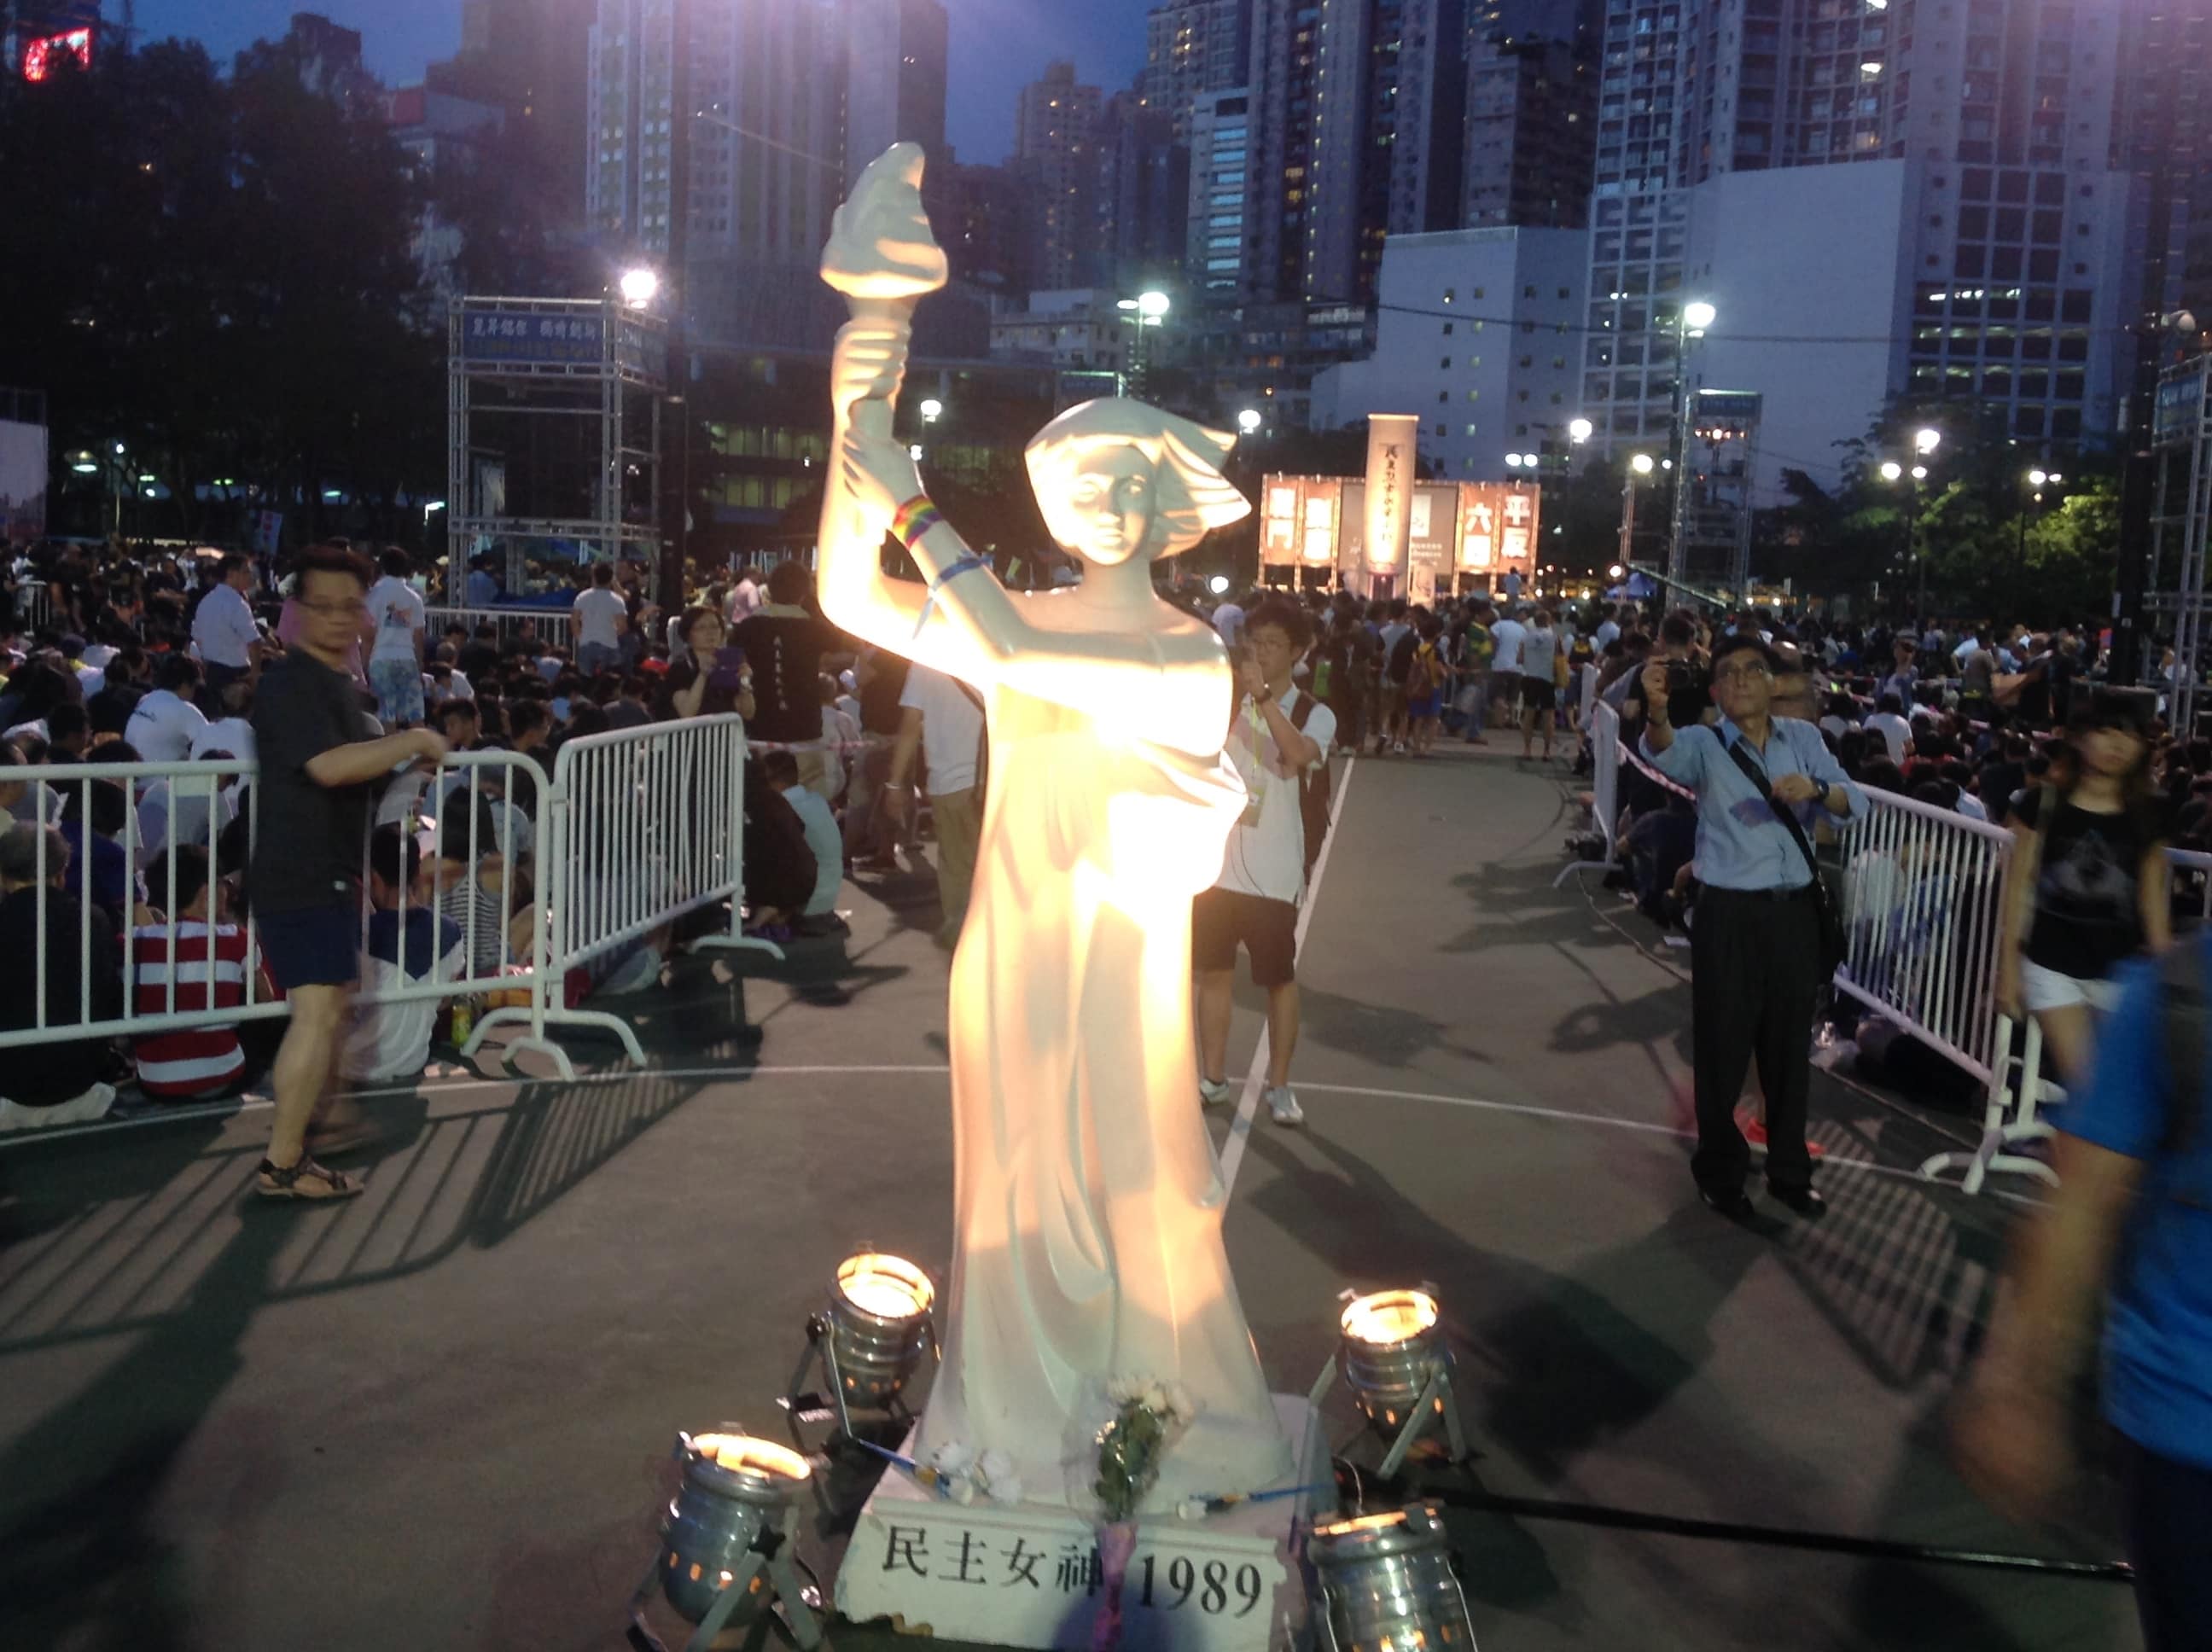 Hong Kong: Activists Detained at Tiananmen Square Commemorations